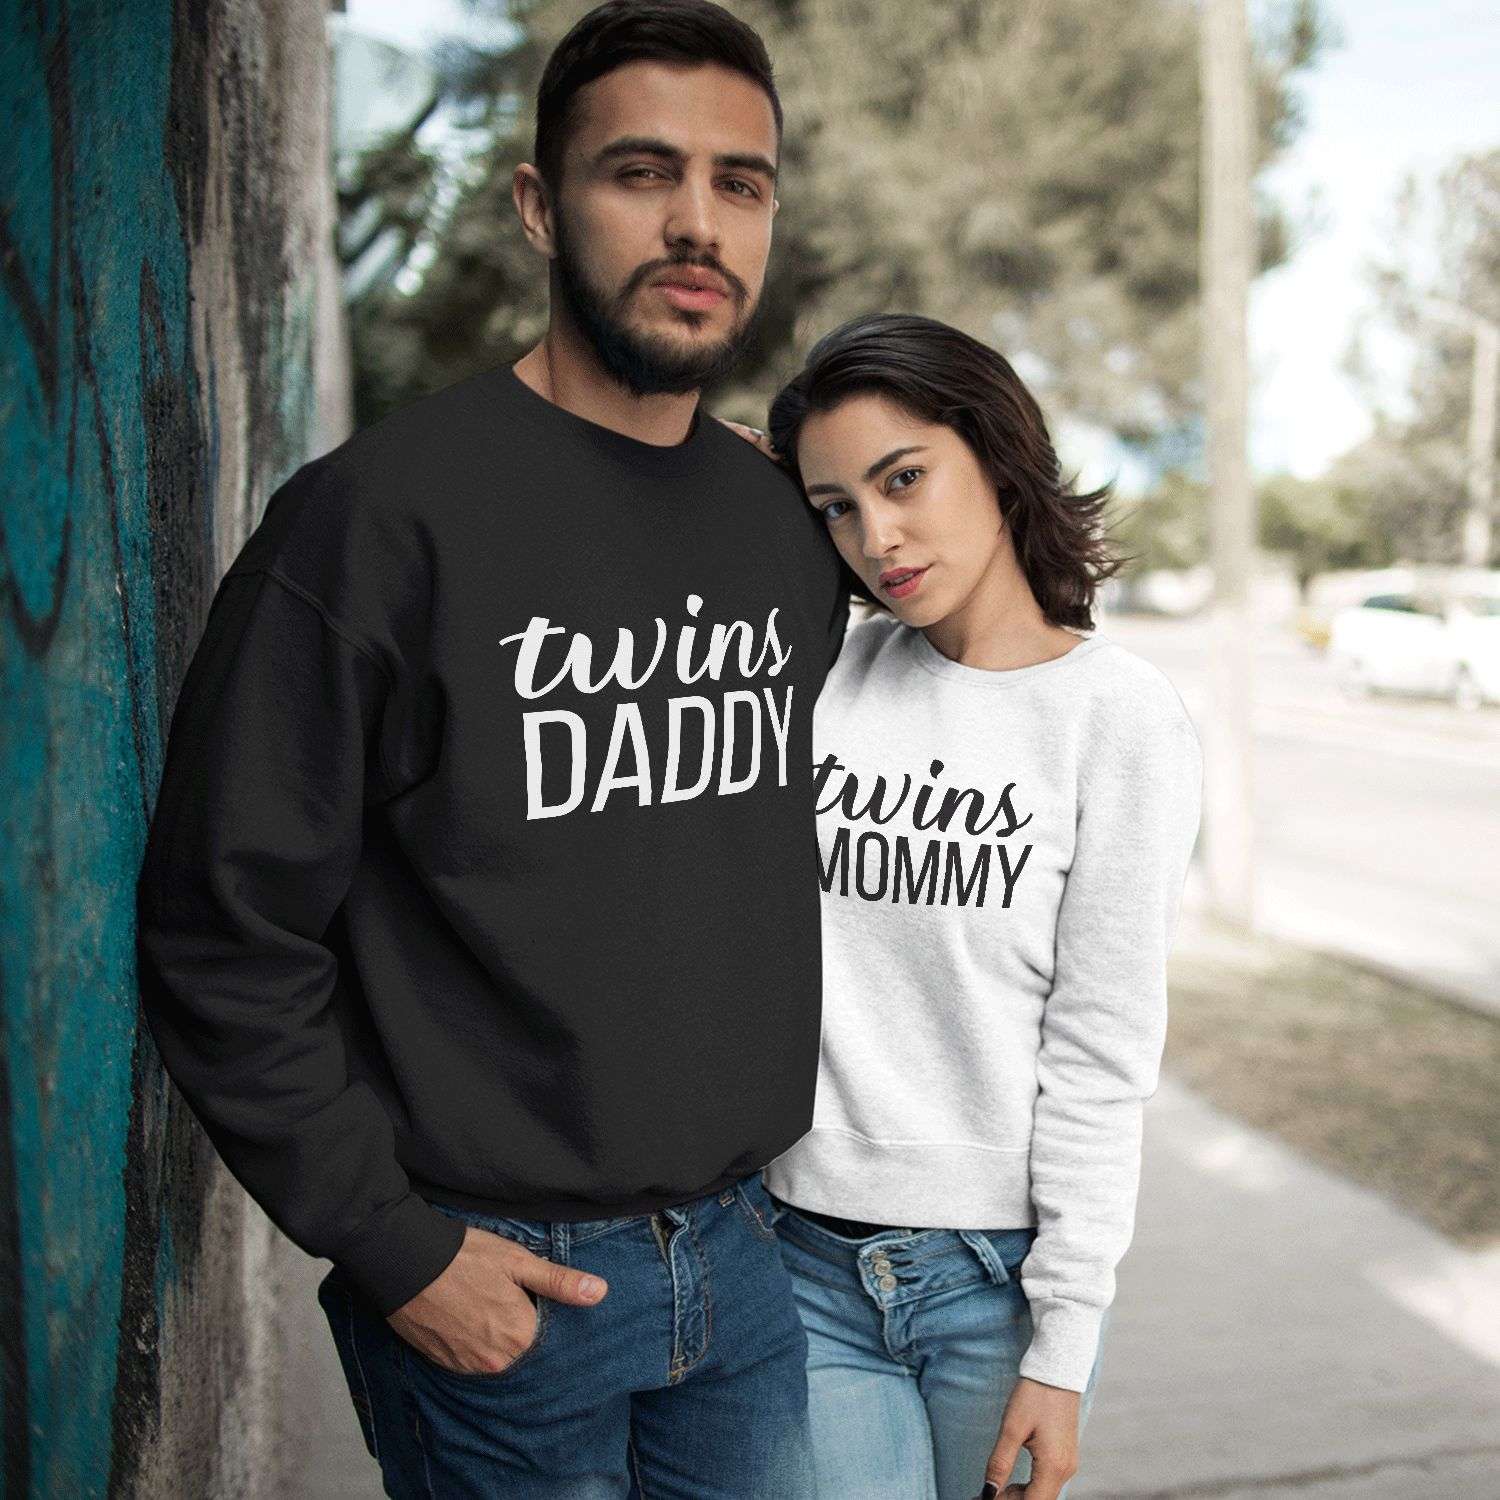 Twins Mommy Twins Daddy Sweatshirts, Couple Sweatshirts, Twins Sweatshirts